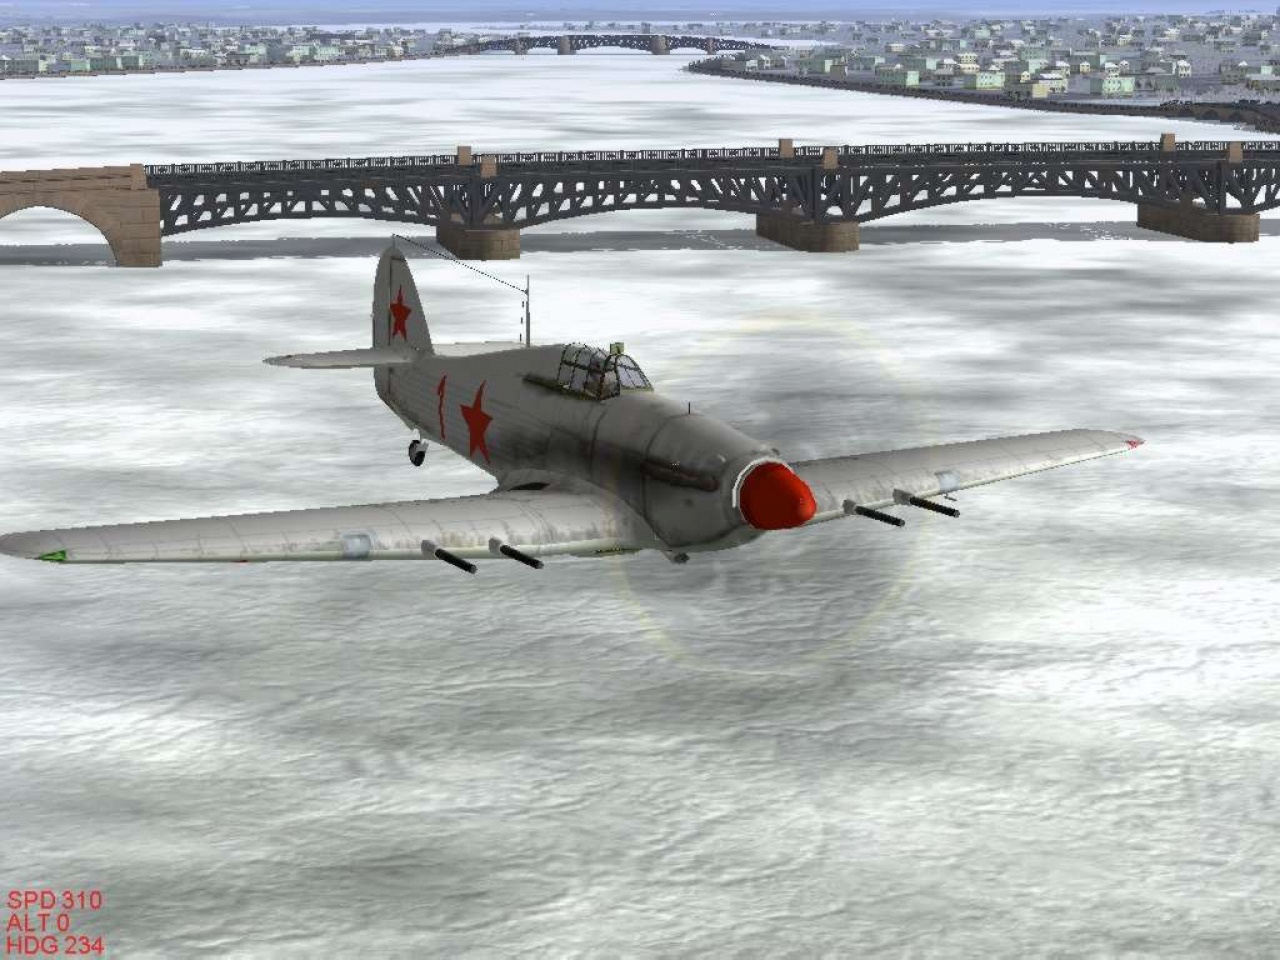 IL-2: Sturmovik Ultimate Edition